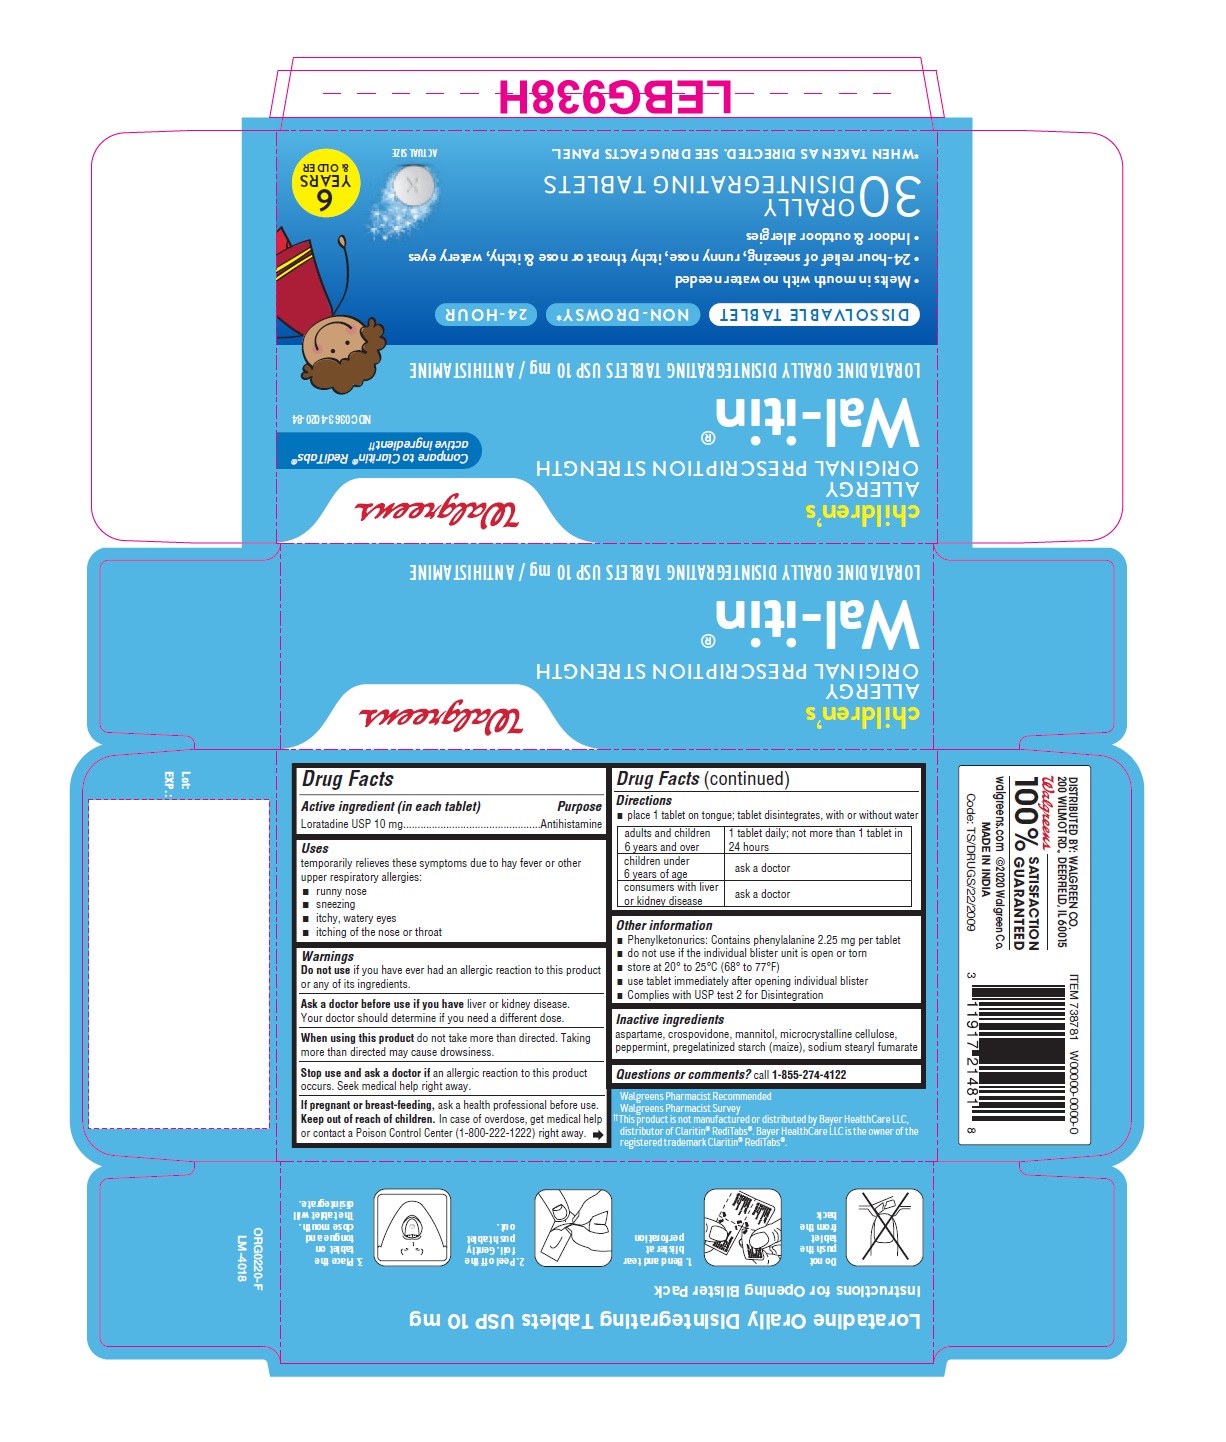 PACKAGE LABEL-PRINCIPAL DISPLAY PANEL - 10 mg, Blister Carton 30 (3 x 10) Orally Disintegrating Tablets